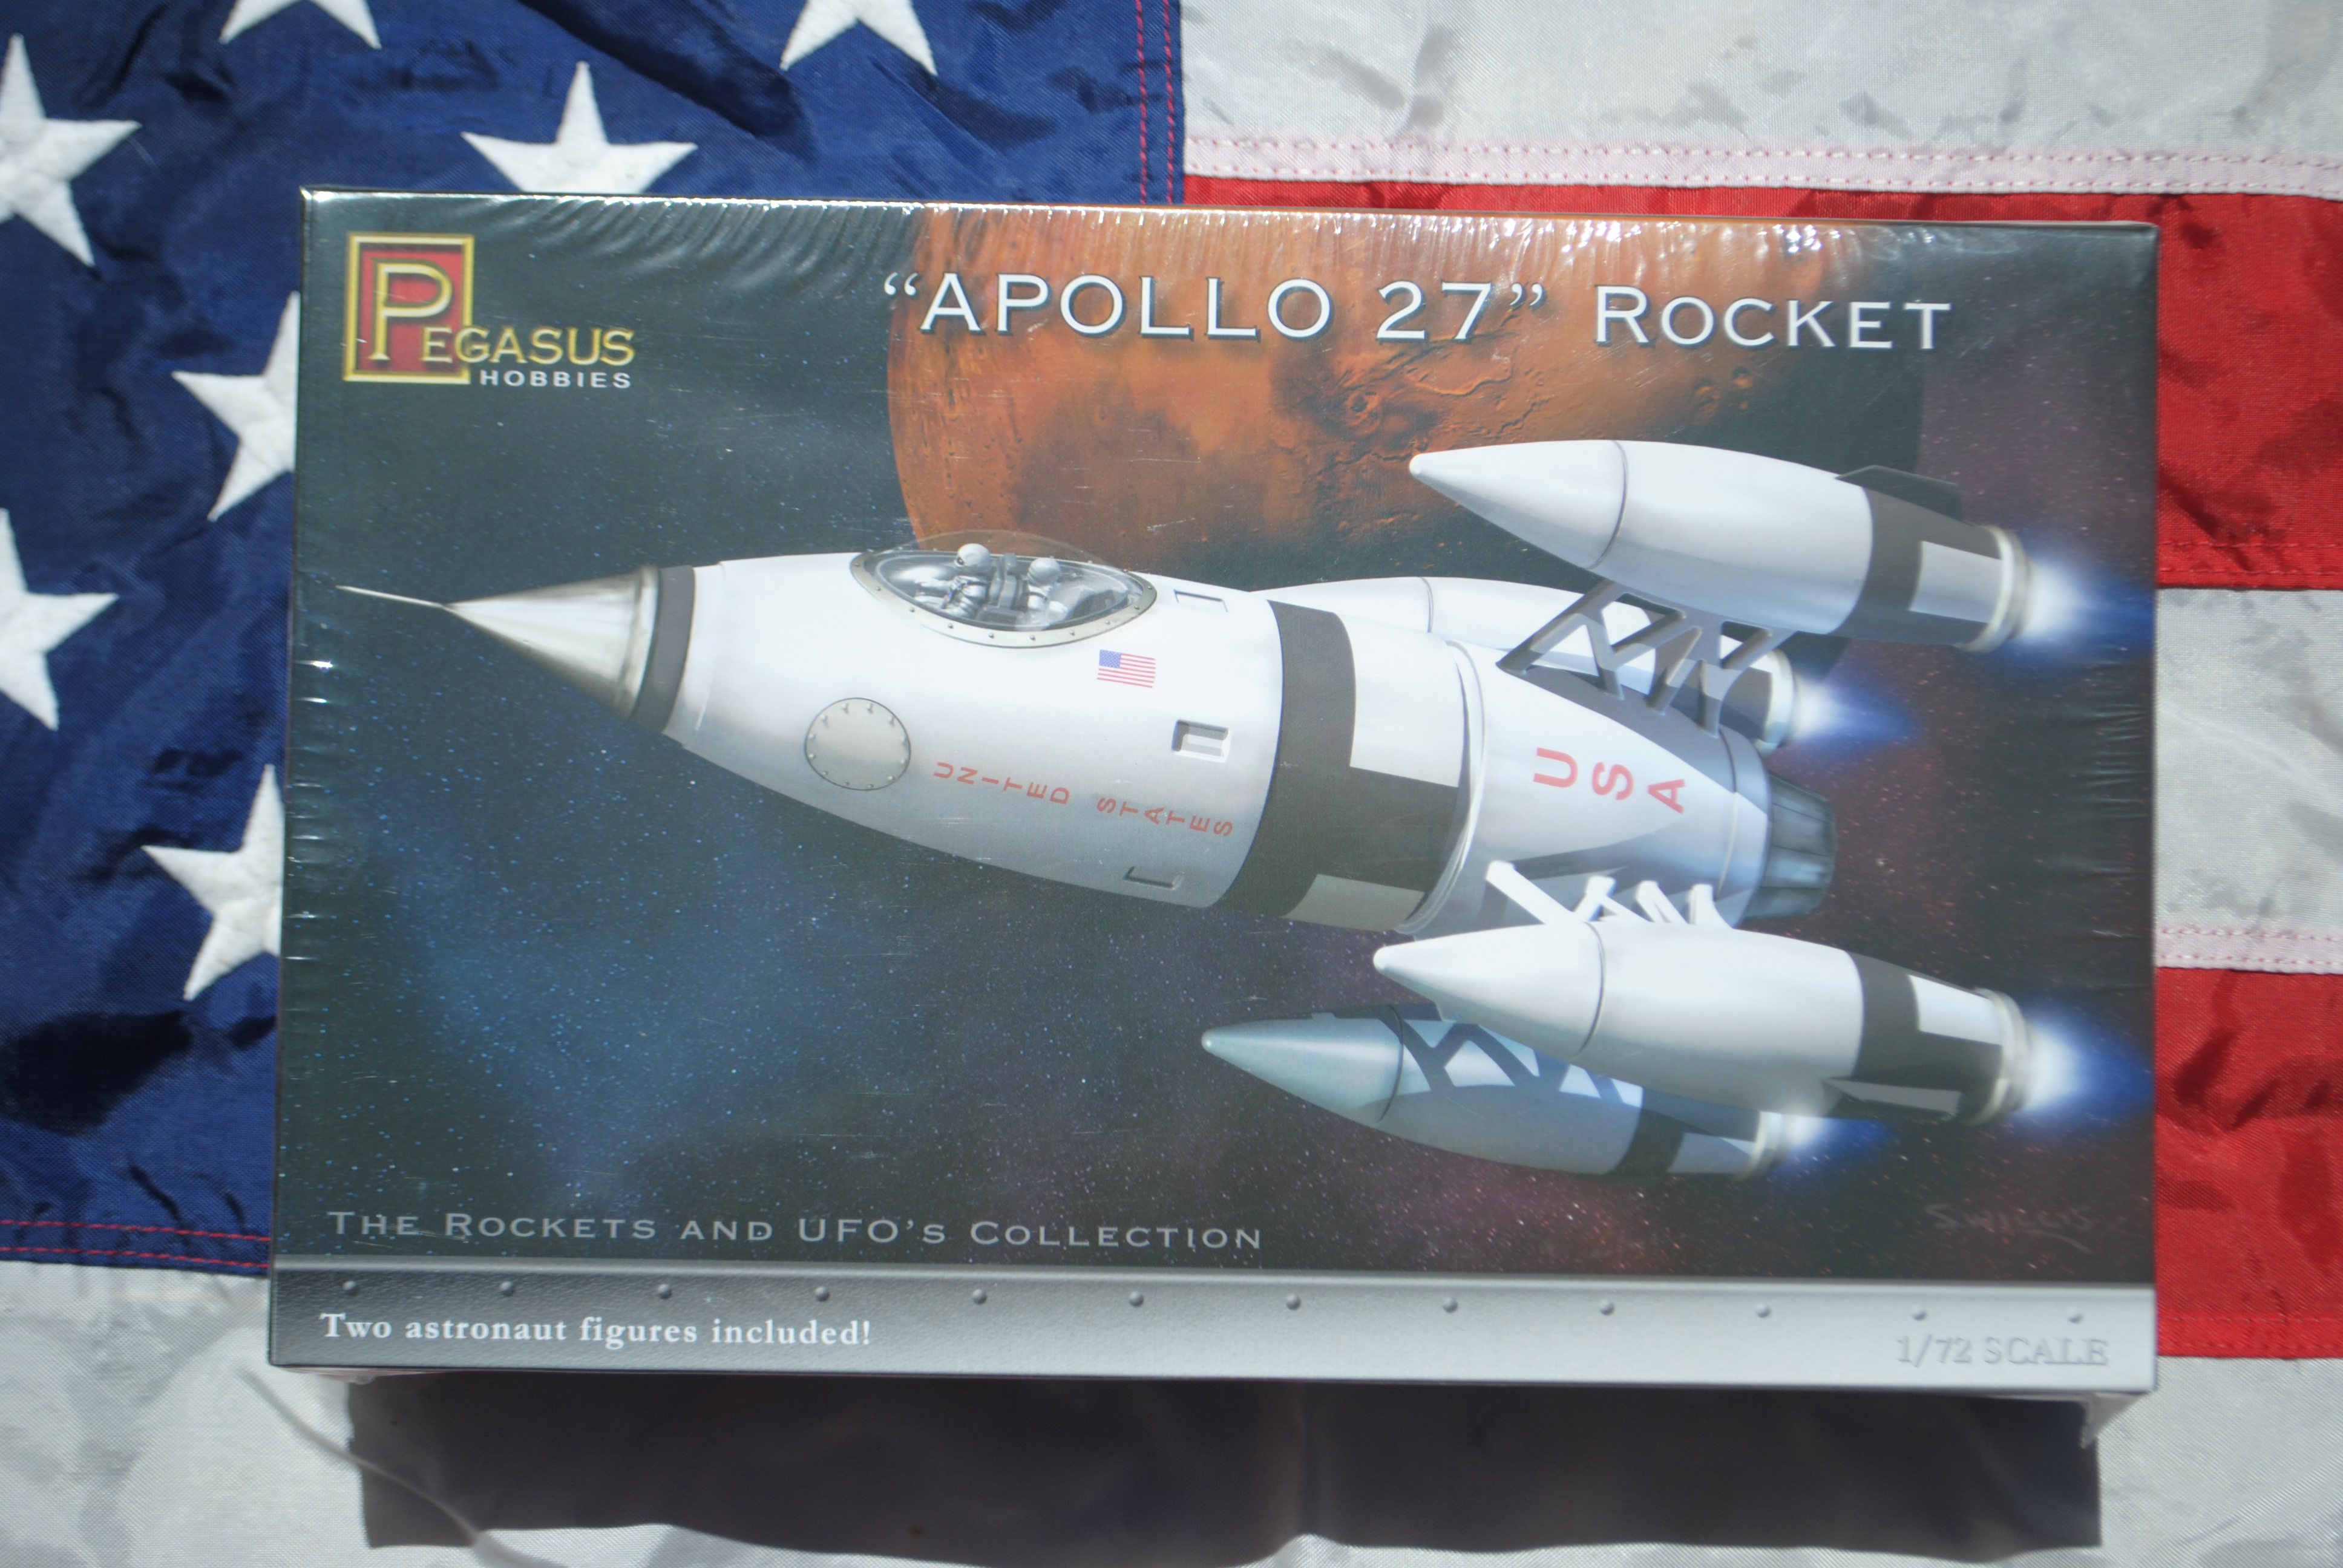 Pegasus hobbies 9101 Apollo 27 Rocket